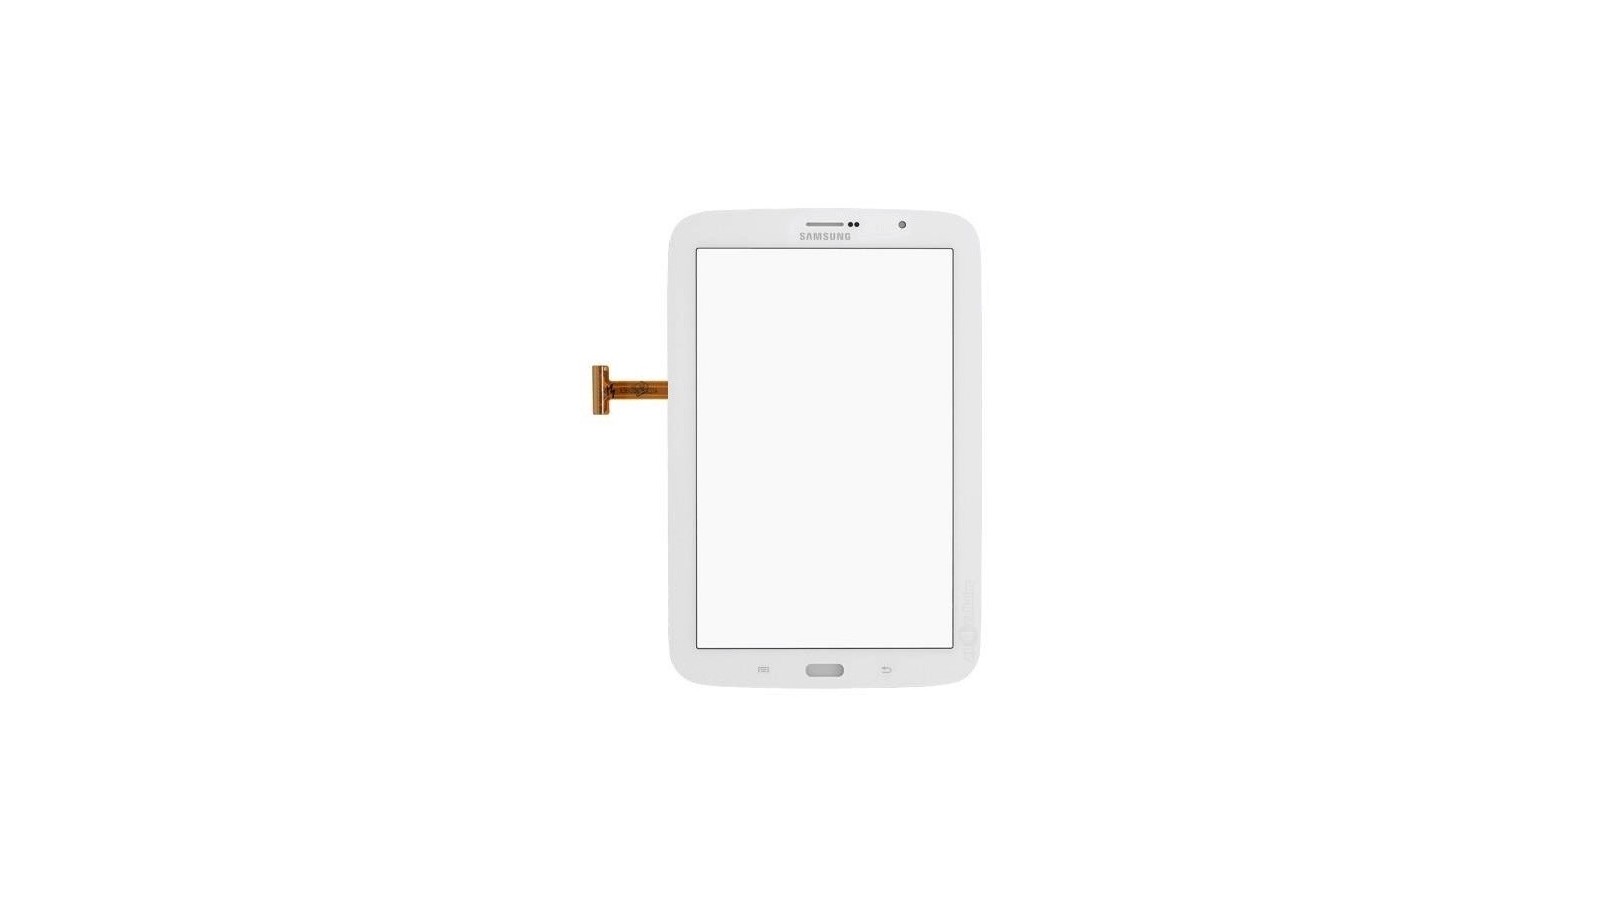 Touch screen e vetro Samsung Galaxy Note 8 GT-N5100 GT-N5110 bianco